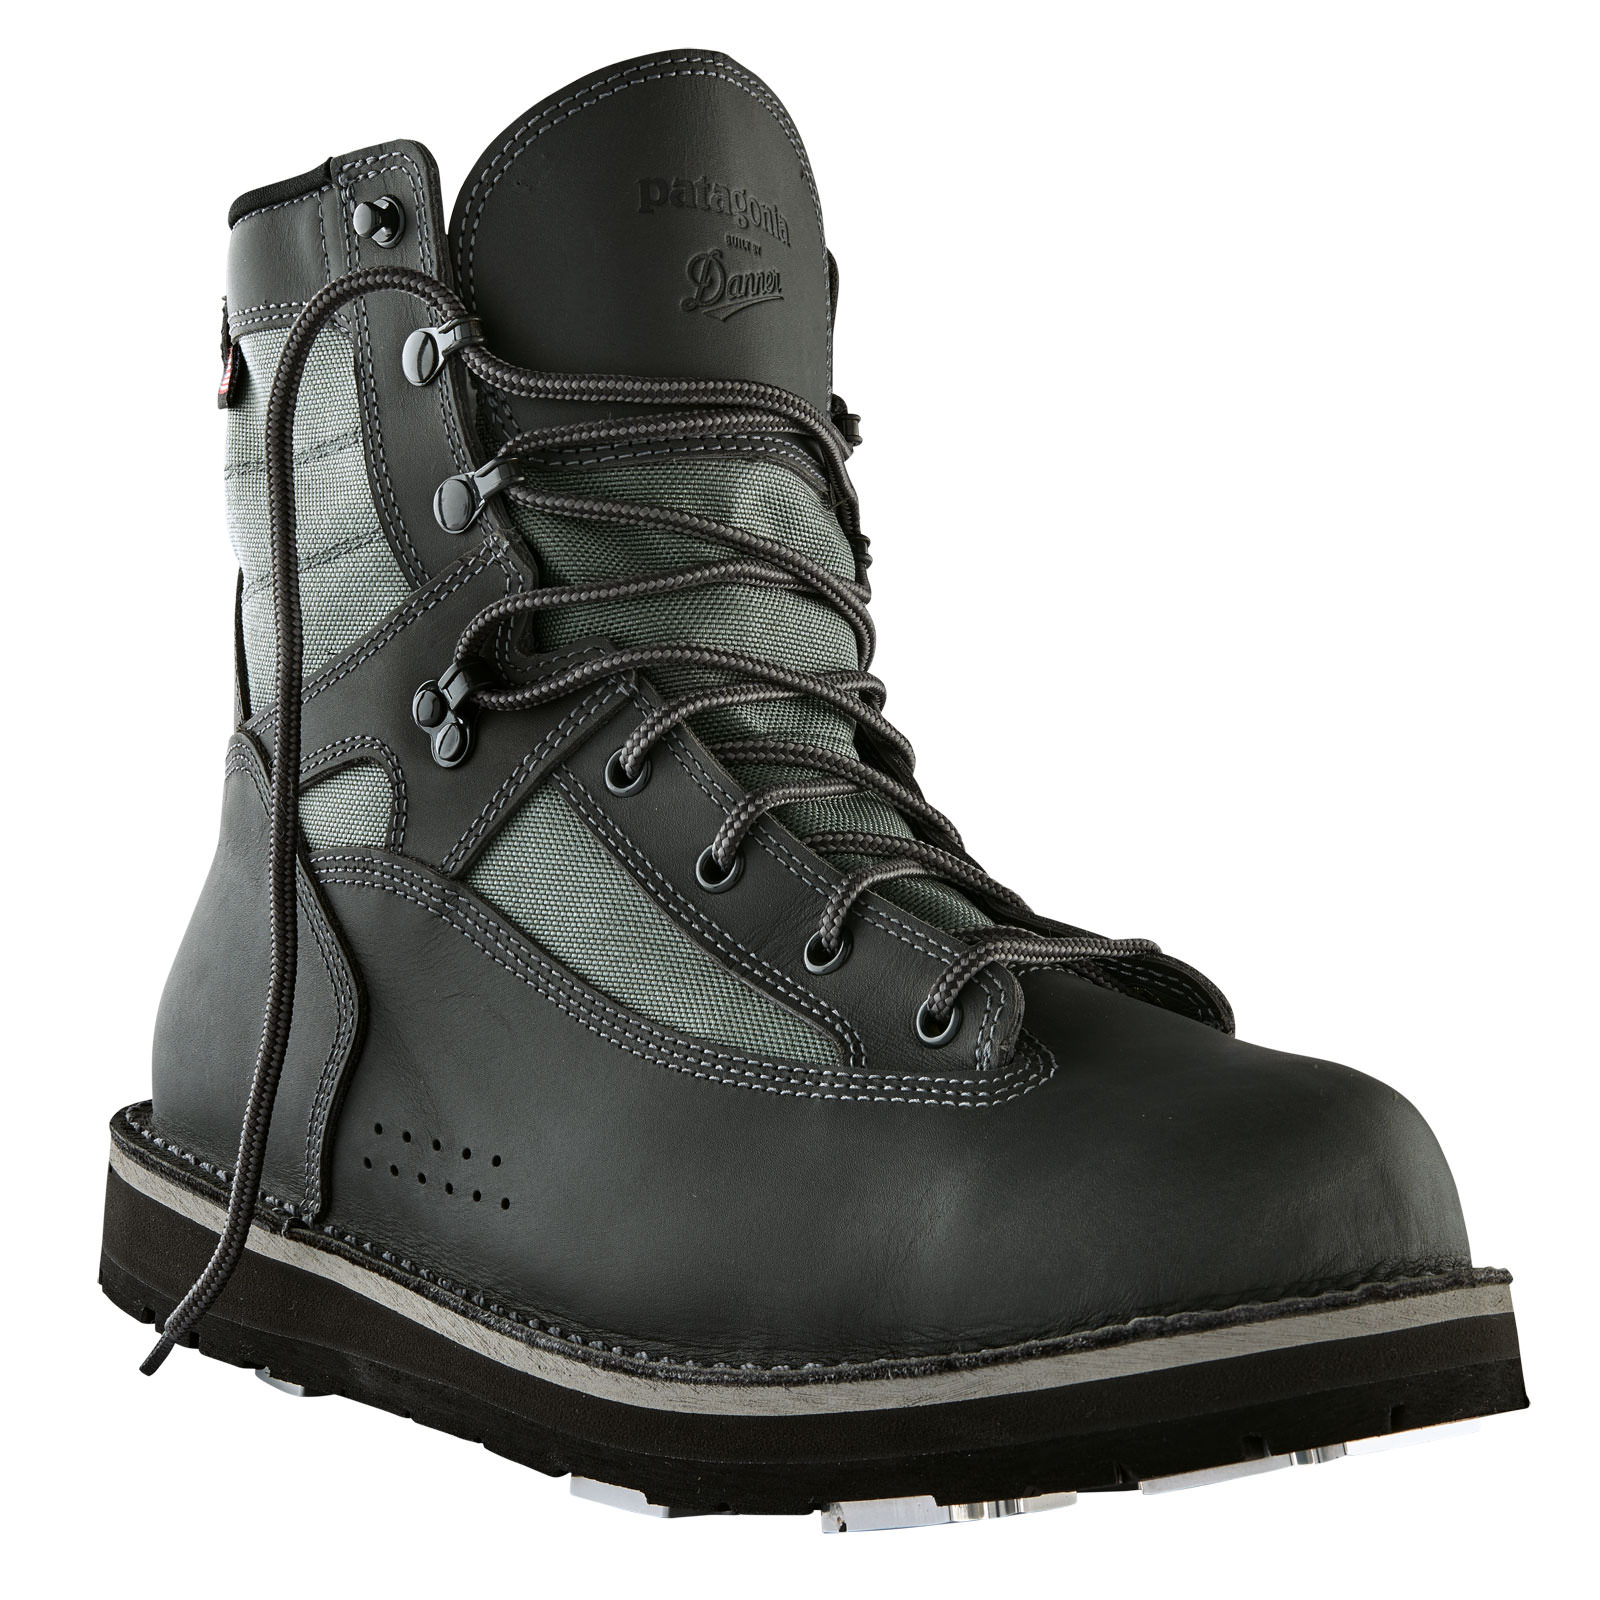 Patagonia Danner Foot Wading Boots-Aluminum Bar - AvidMax